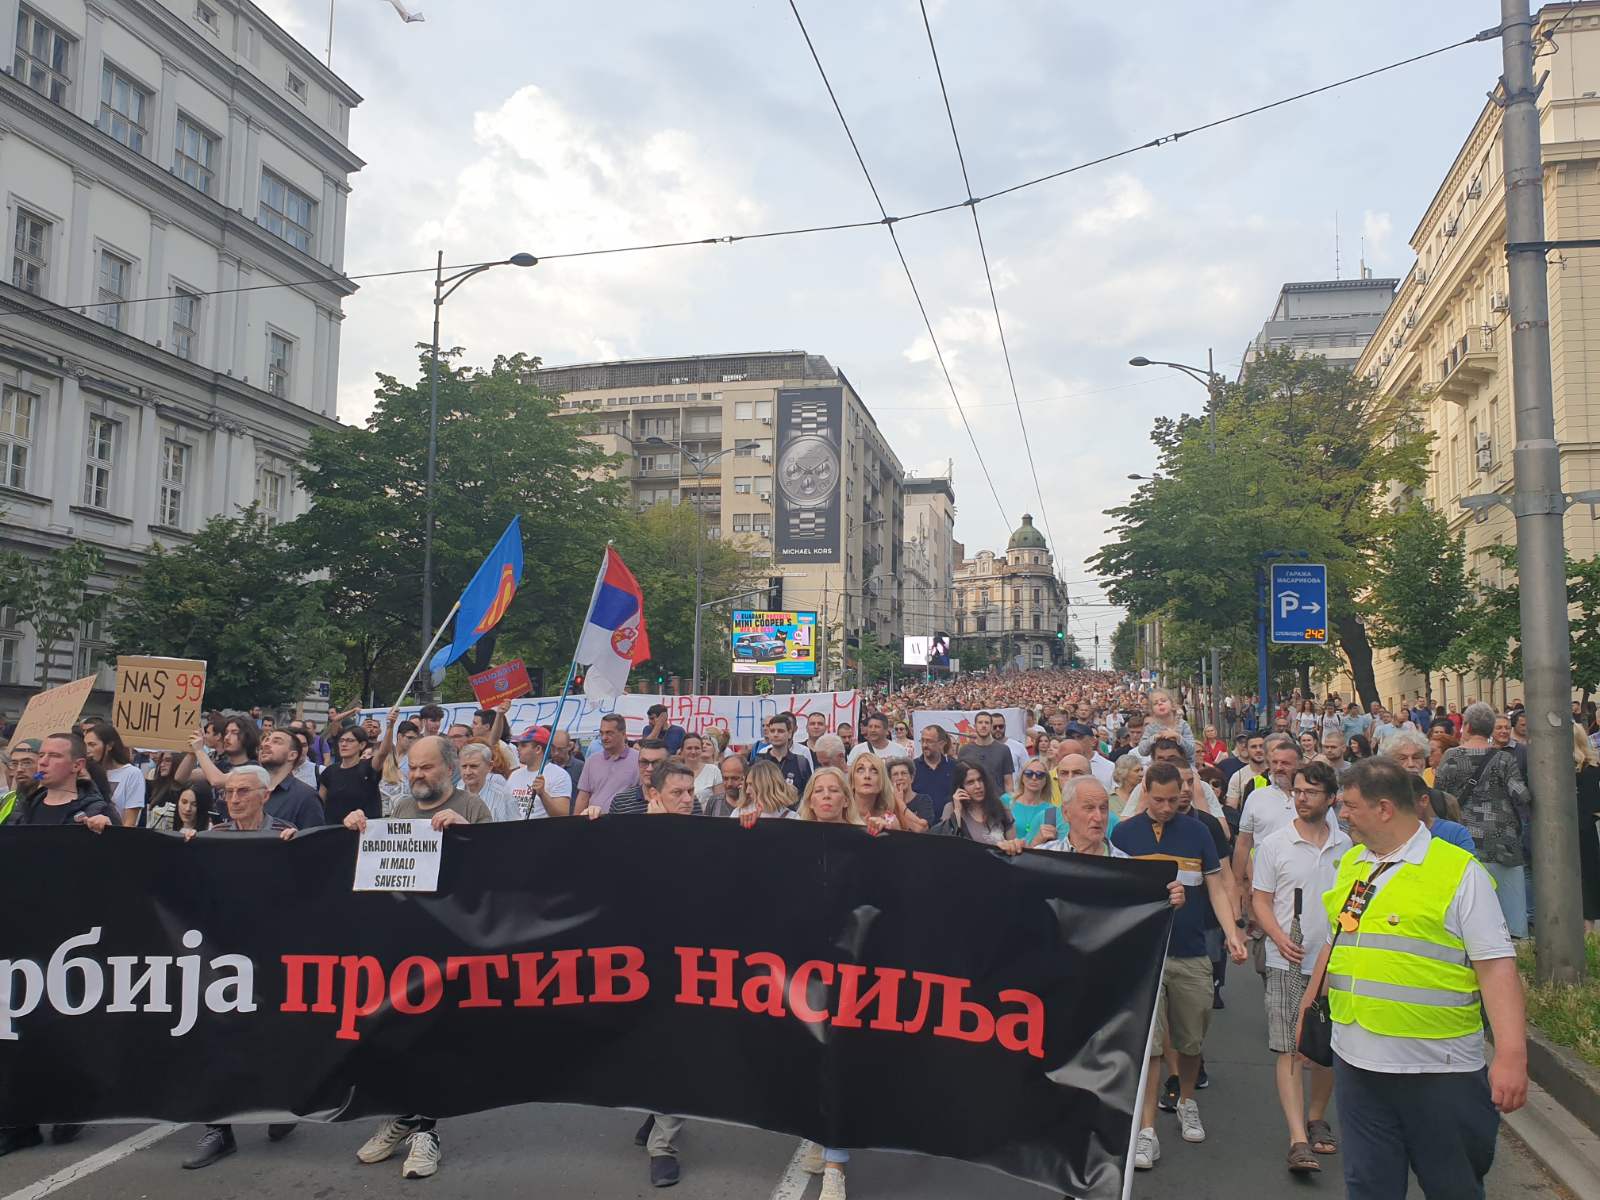 Protest "Srbija protiv nasilja" u preko 10 gradova obeležile šetnje, blokade puteva i zahtevi za ostavkama (FOTO, VIDEO) 51